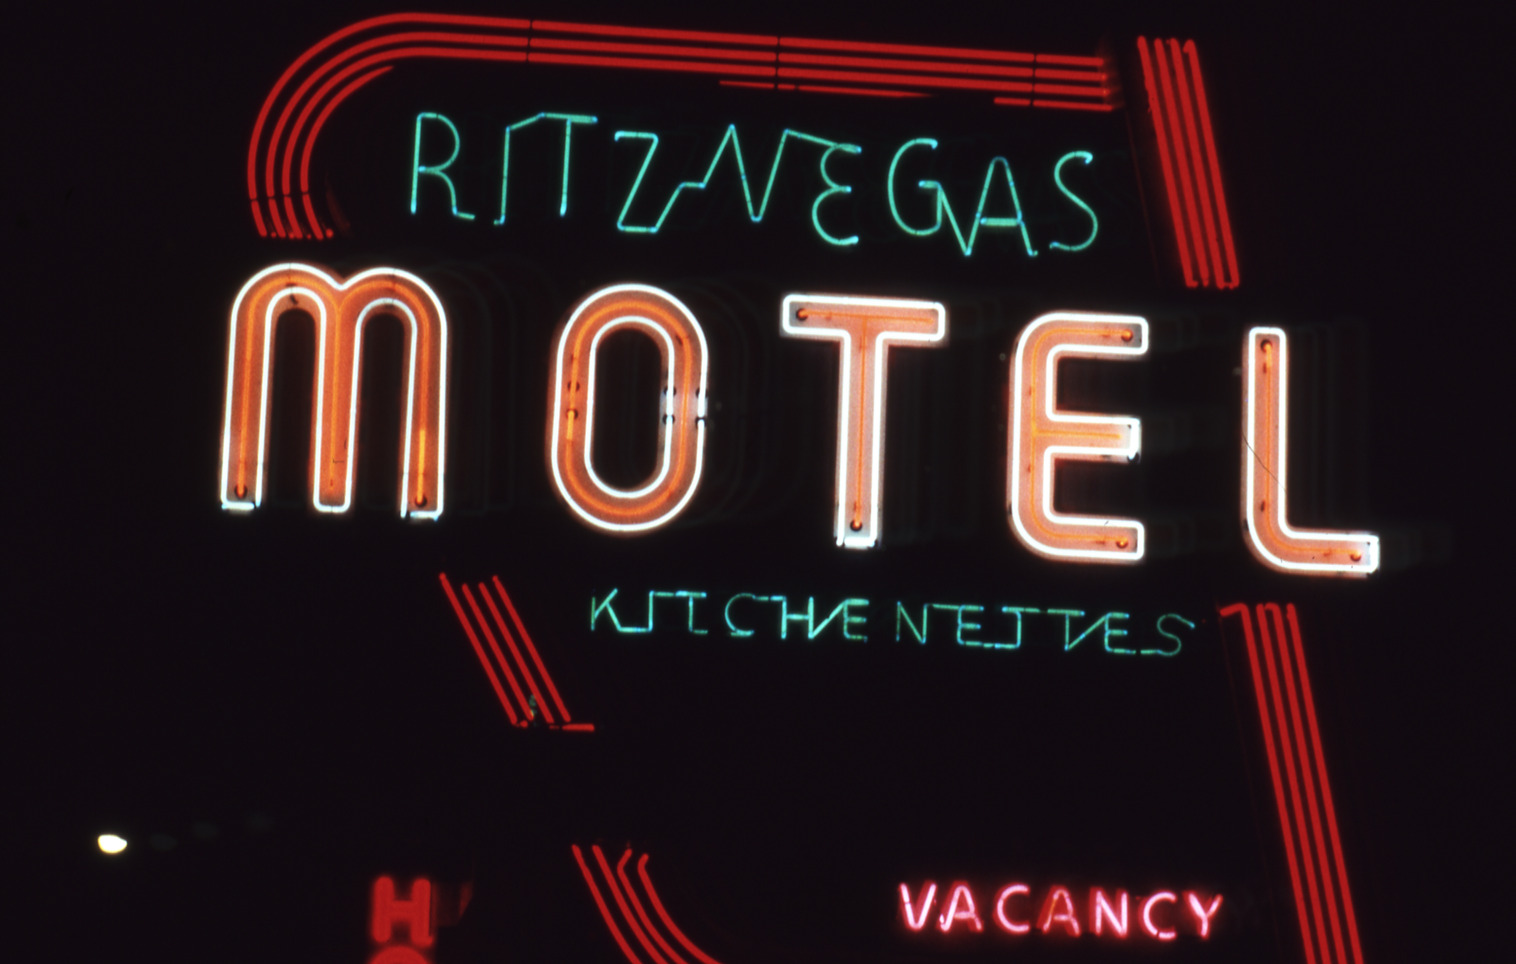 RitzVegas Motel sign, Las Vegas, Nevada: photographic print